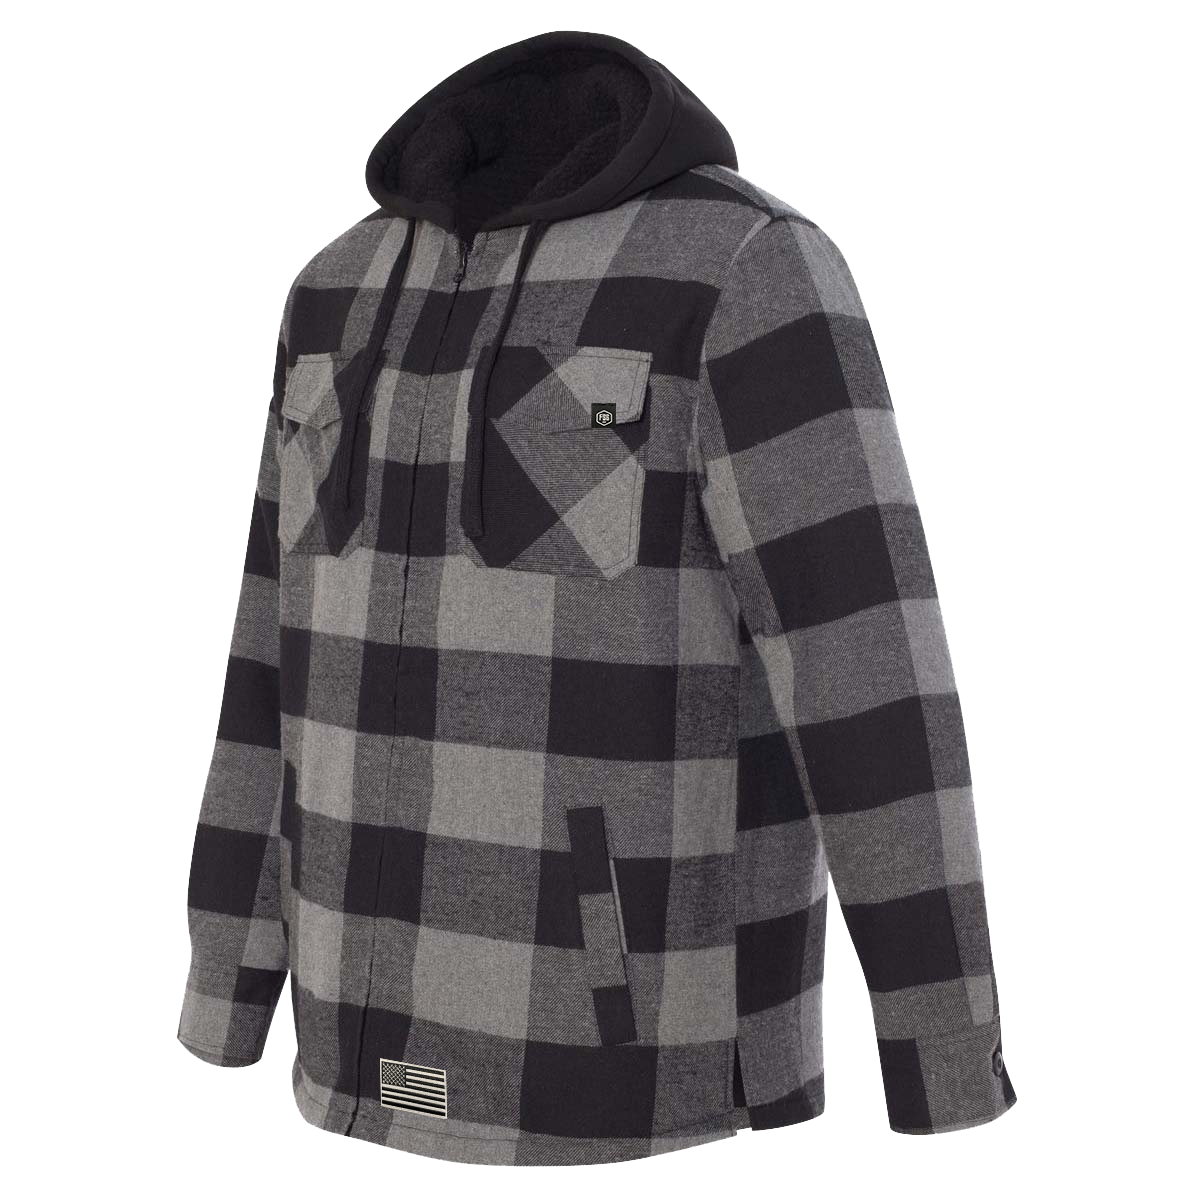 The Flashbang - White/Black Flannel Jacket